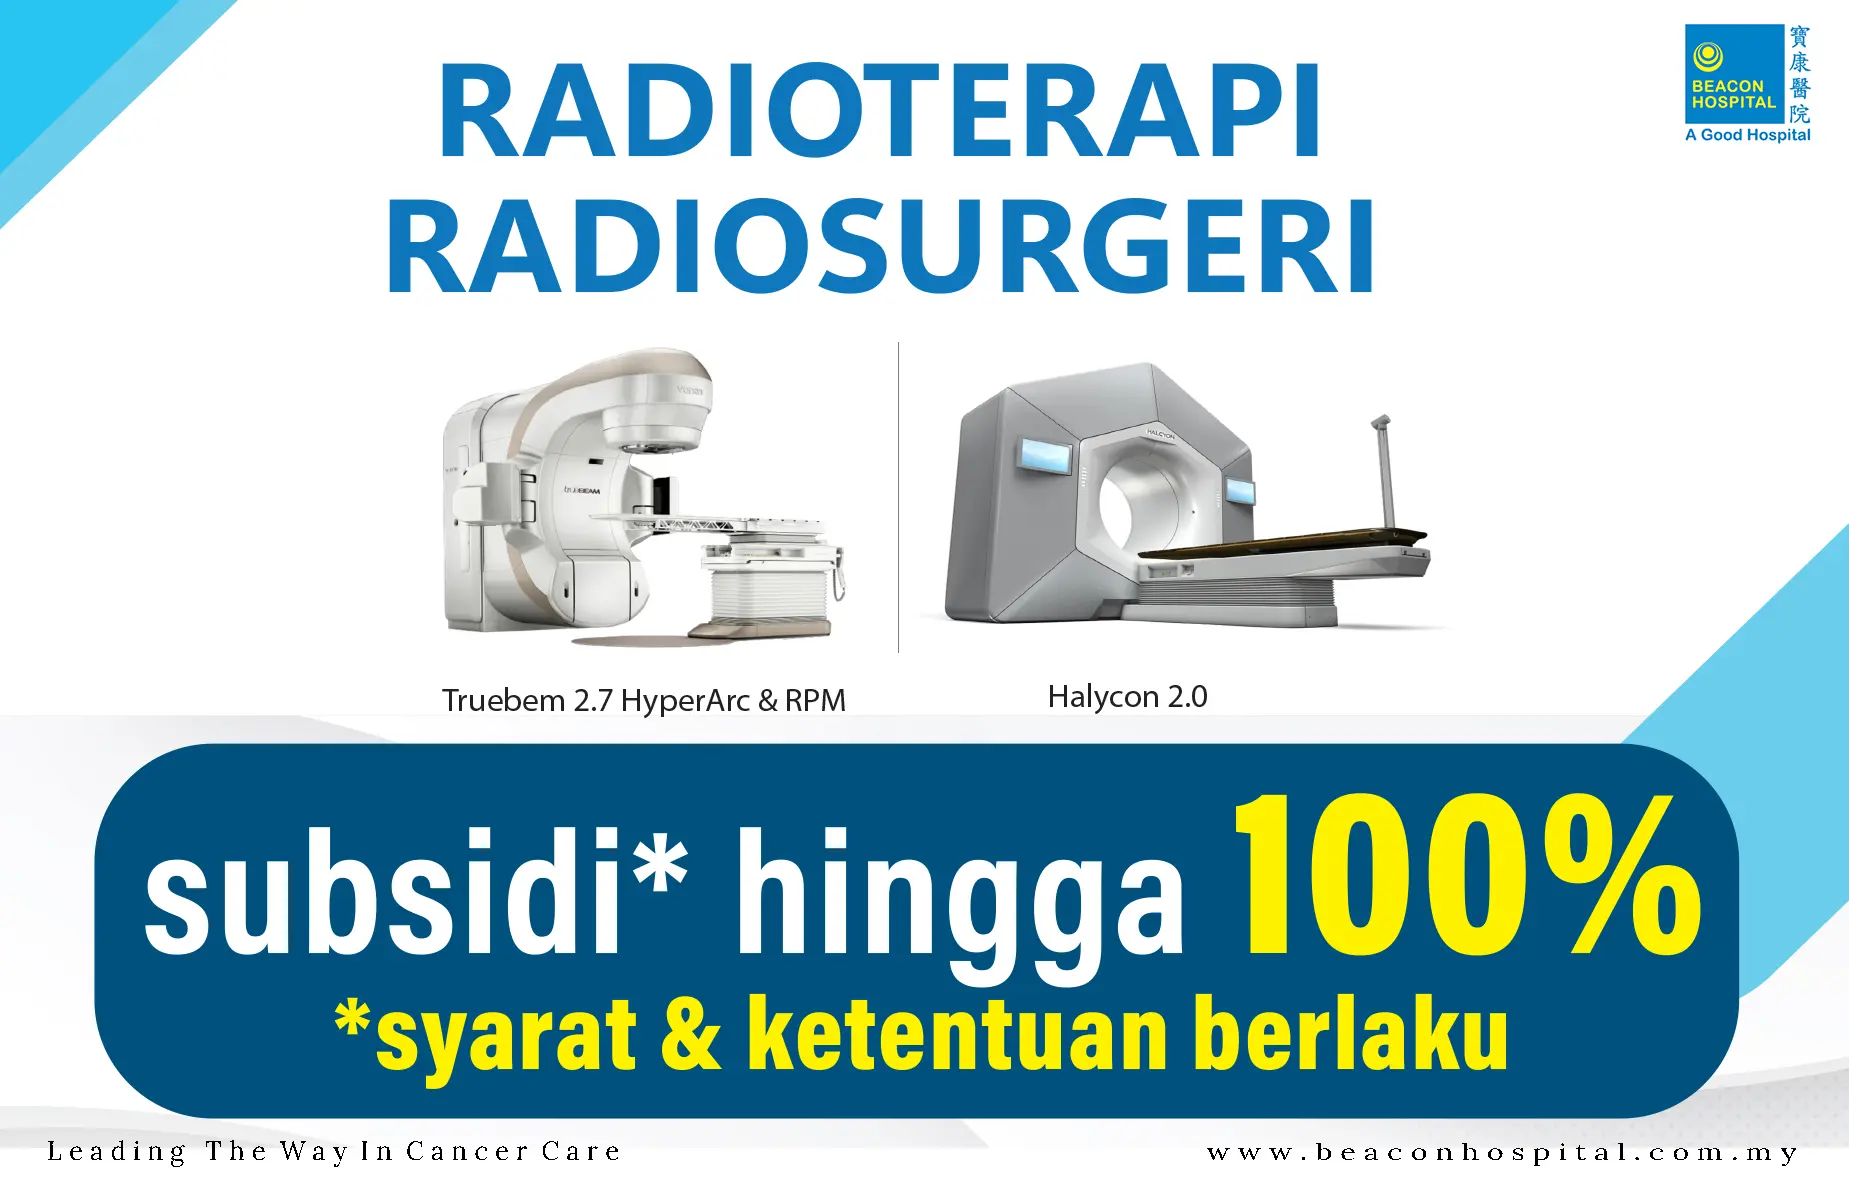 radioterapi-radiosurgeri-bantuan-csr-beacon